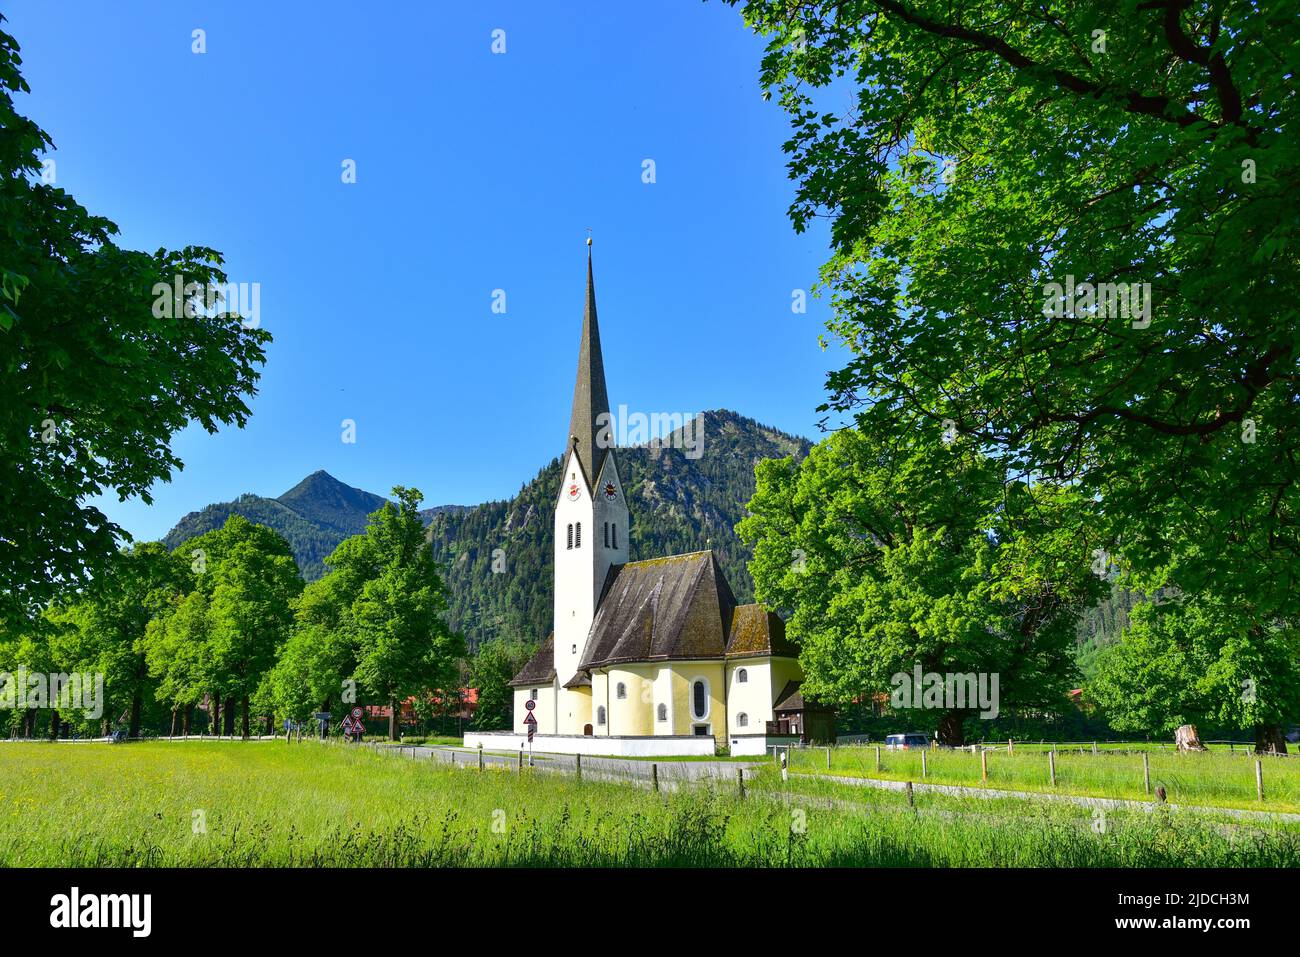 Sankt Leonhard church in Fischhausen, Schliersee, district of Miesbach, Bavaria, Germany, Europe Stock Photo